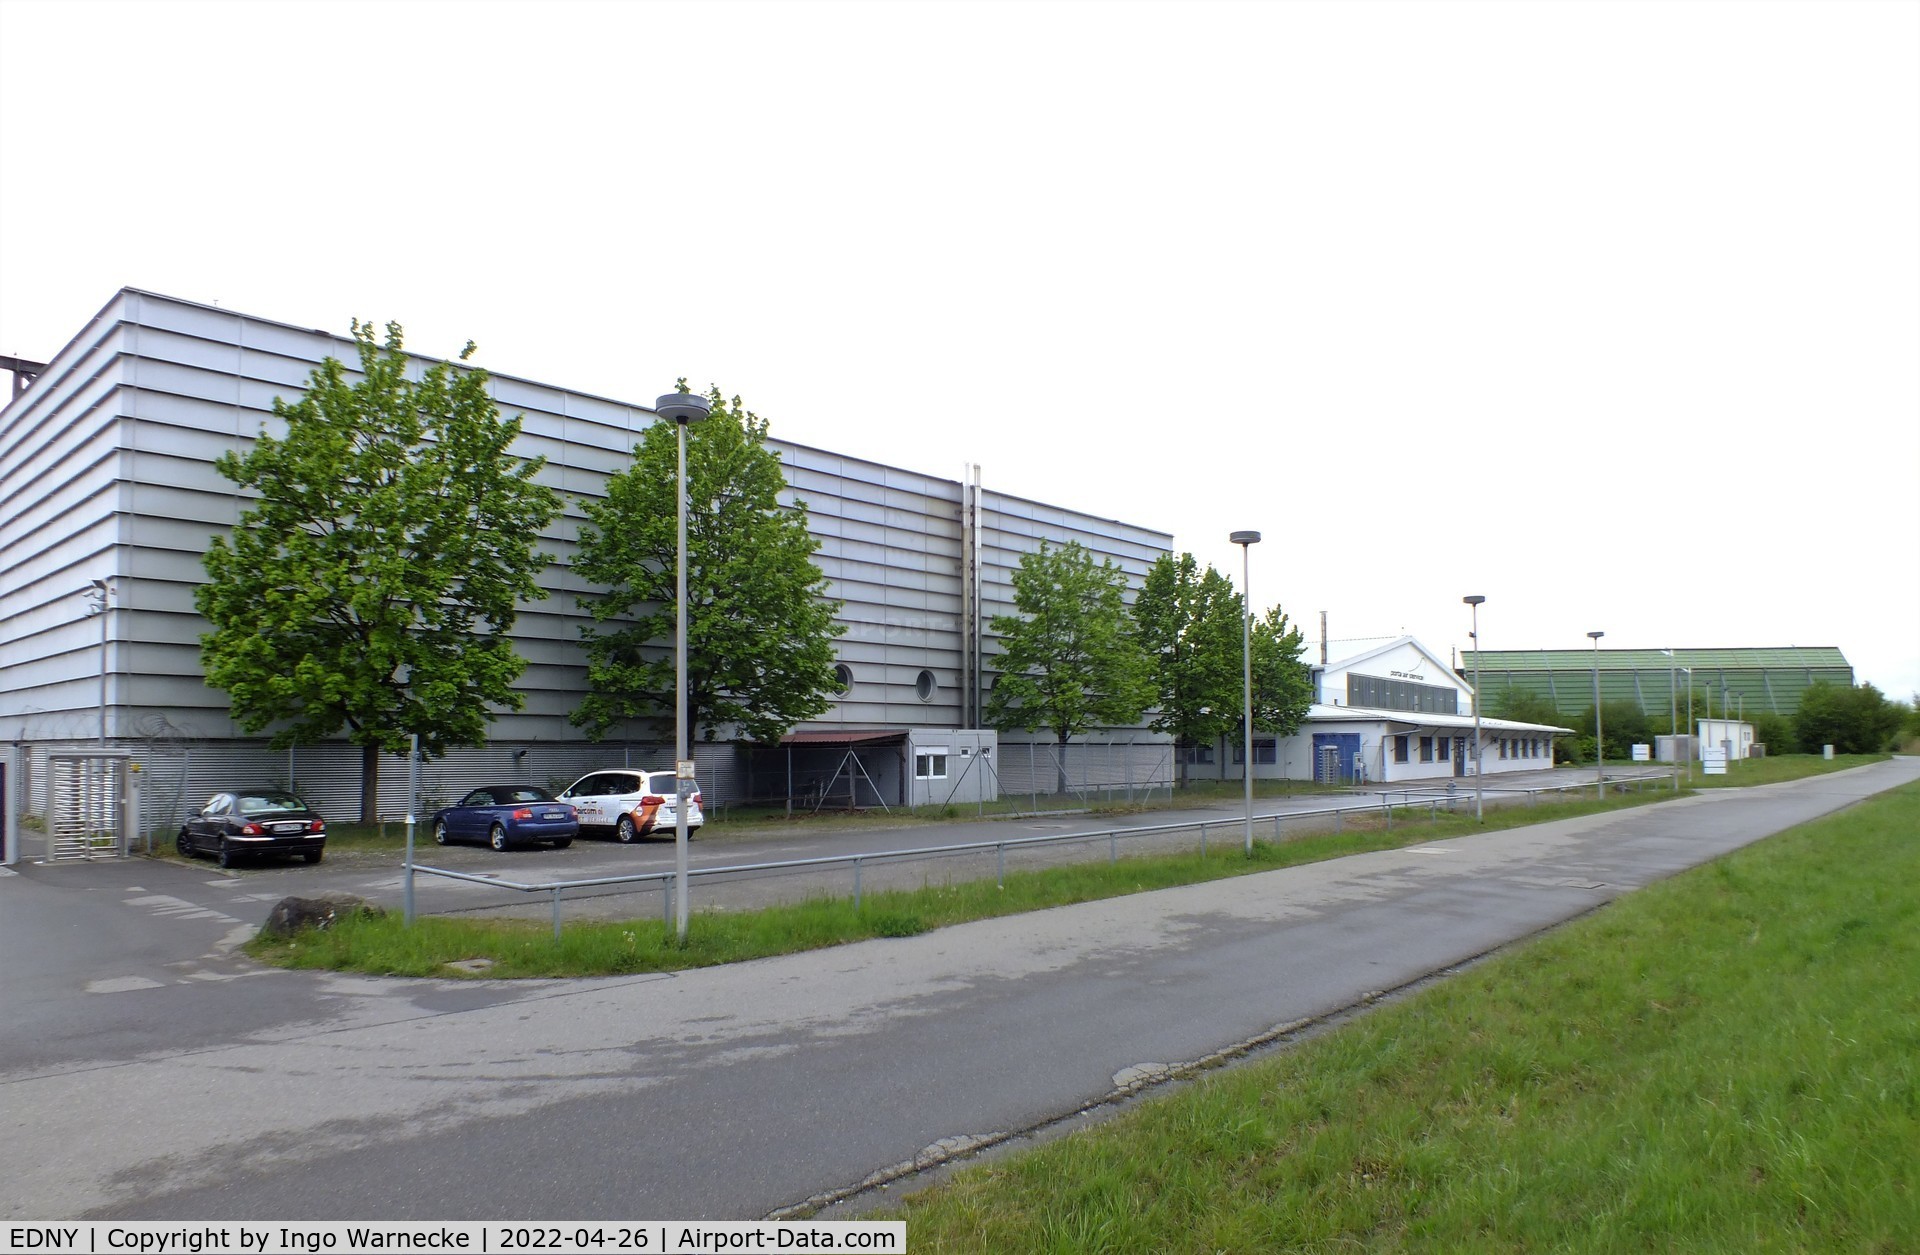 Bodensee Airport, Friedrichshafen Germany (EDNY) - western hangars at Friedrichshafen Bodensee airport